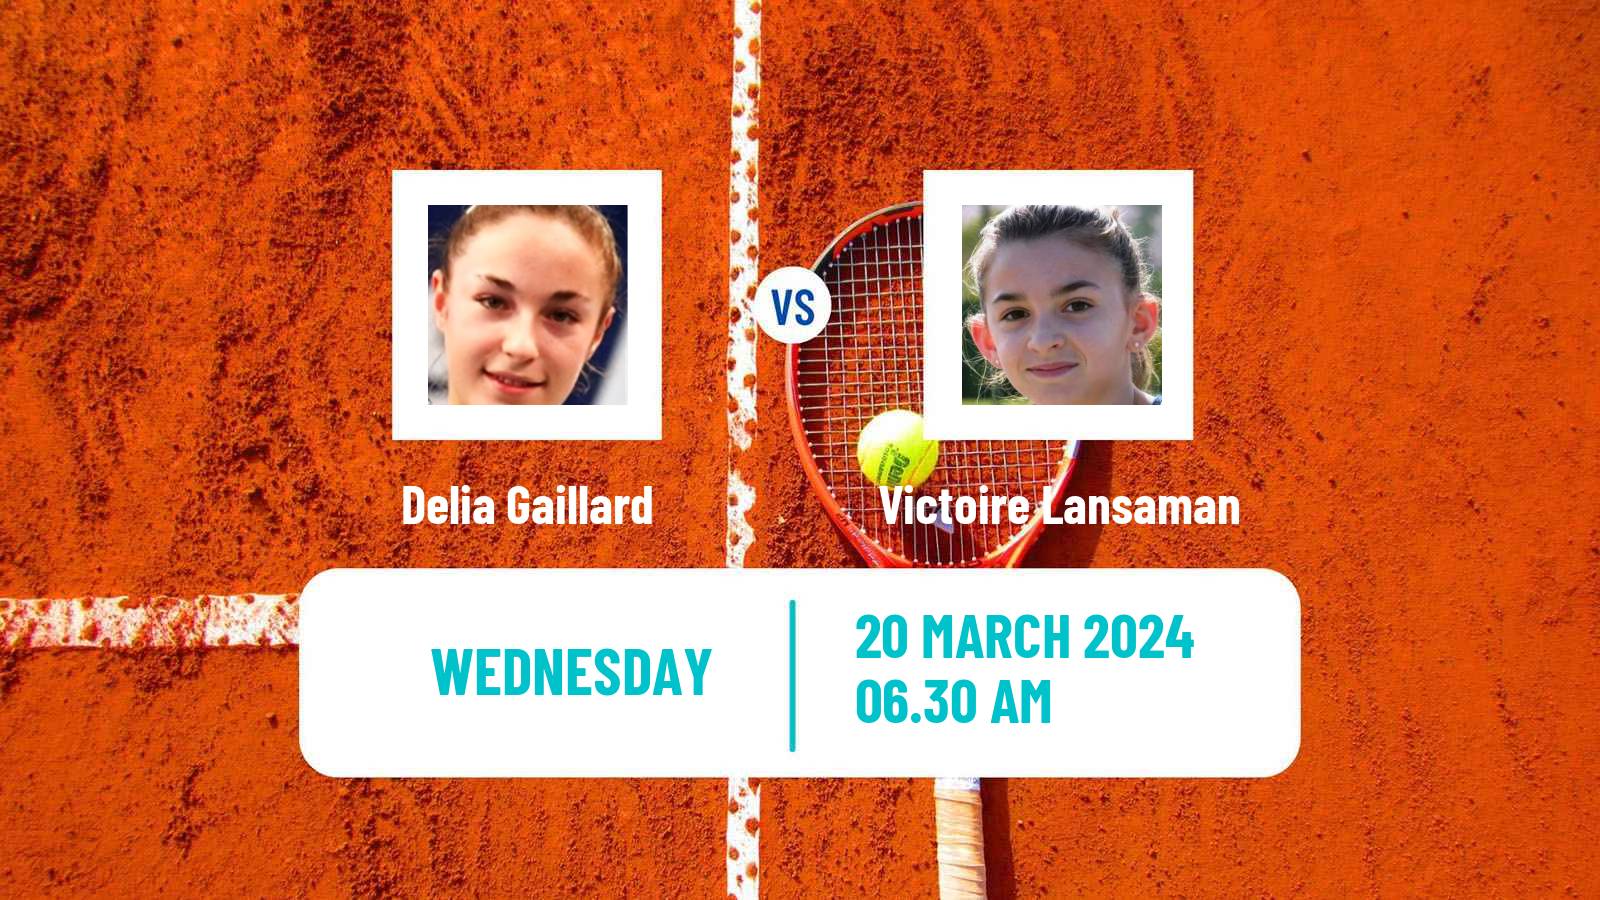 Tennis ITF W15 Le Havre Women Delia Gaillard - Victoire Lansaman